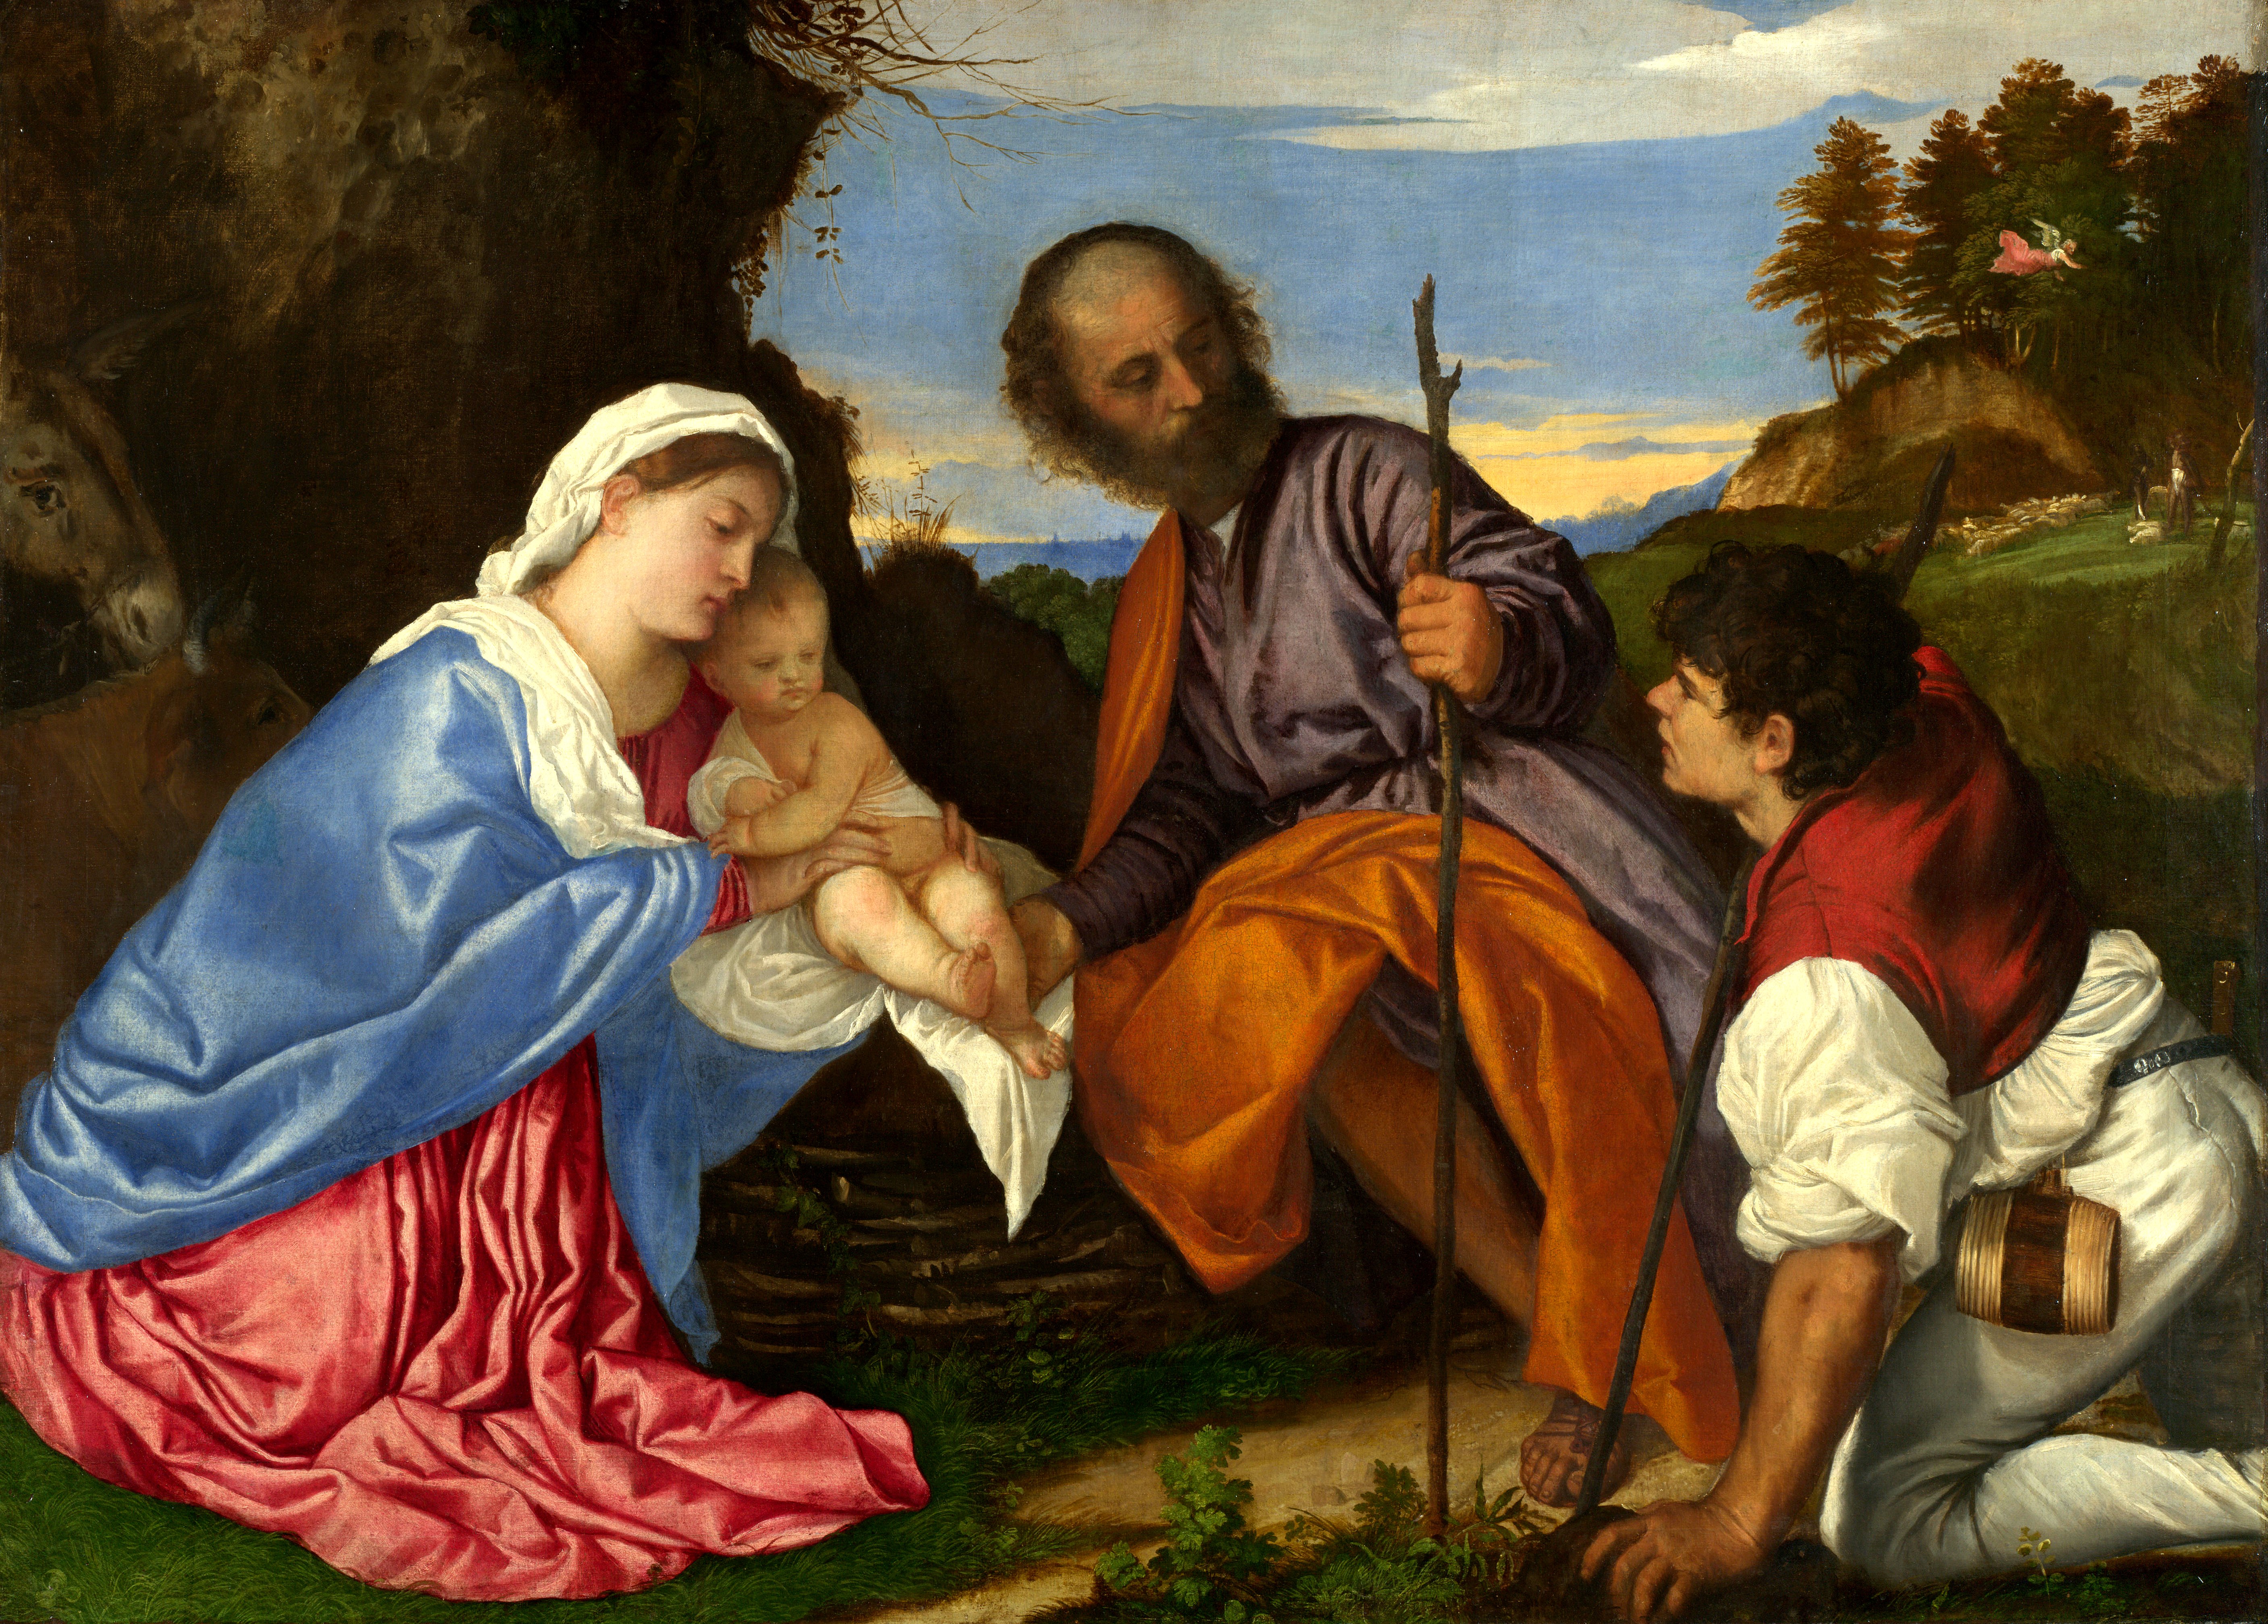 Рождение возрождение. Тициан святое семейство. Джорджоне святое семейство. Тициан Вечеллио картины. «Святое семейство с пастырем» Тициана Вечеллио.